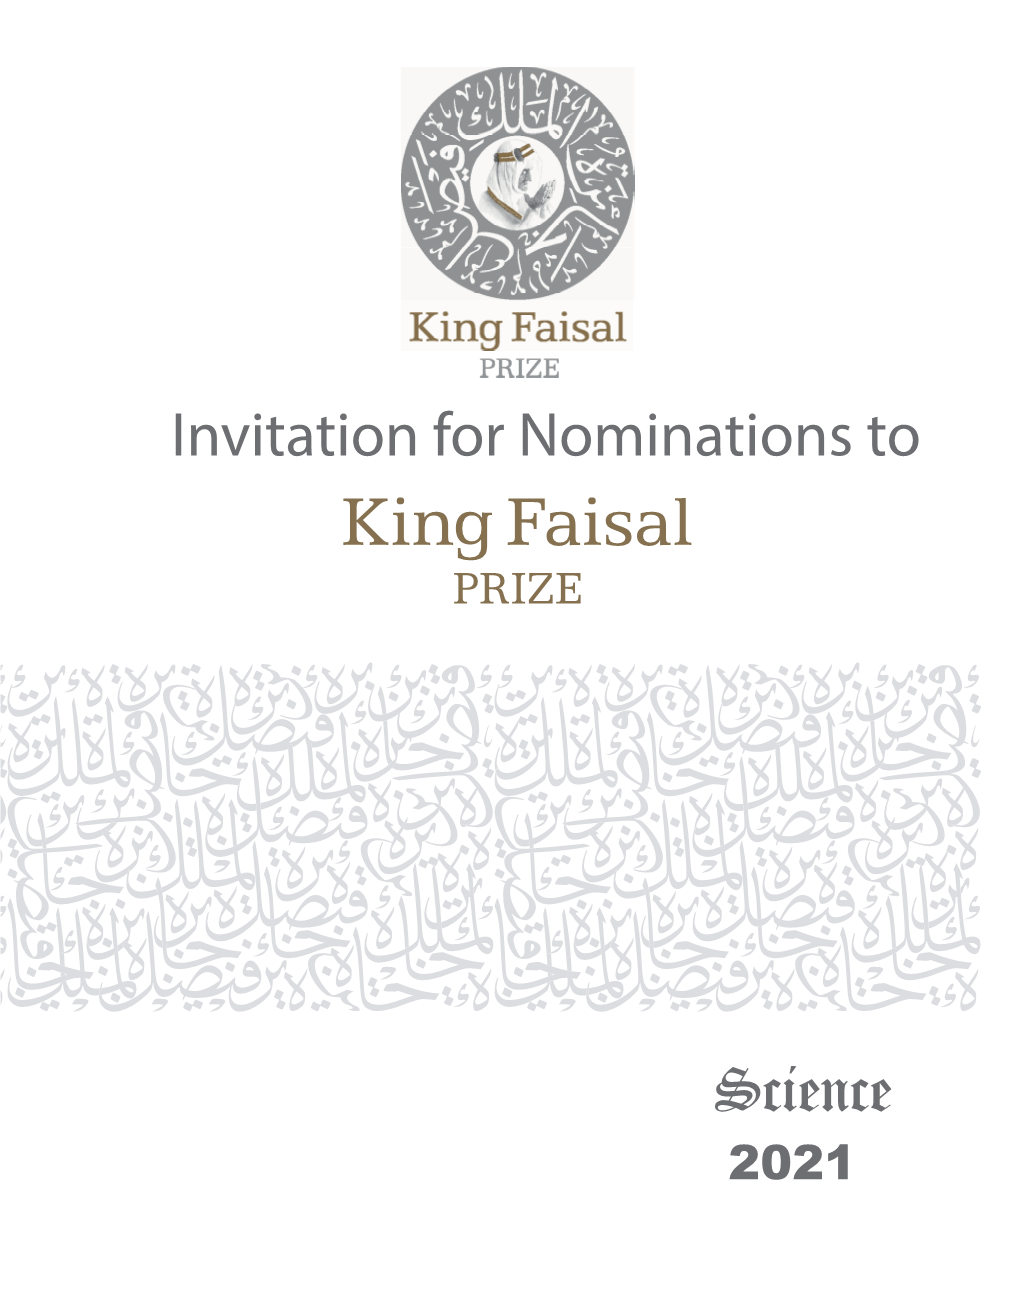 Science 2021 King Faisal Prize Al-Khairia Building, King Fahd Road P.O